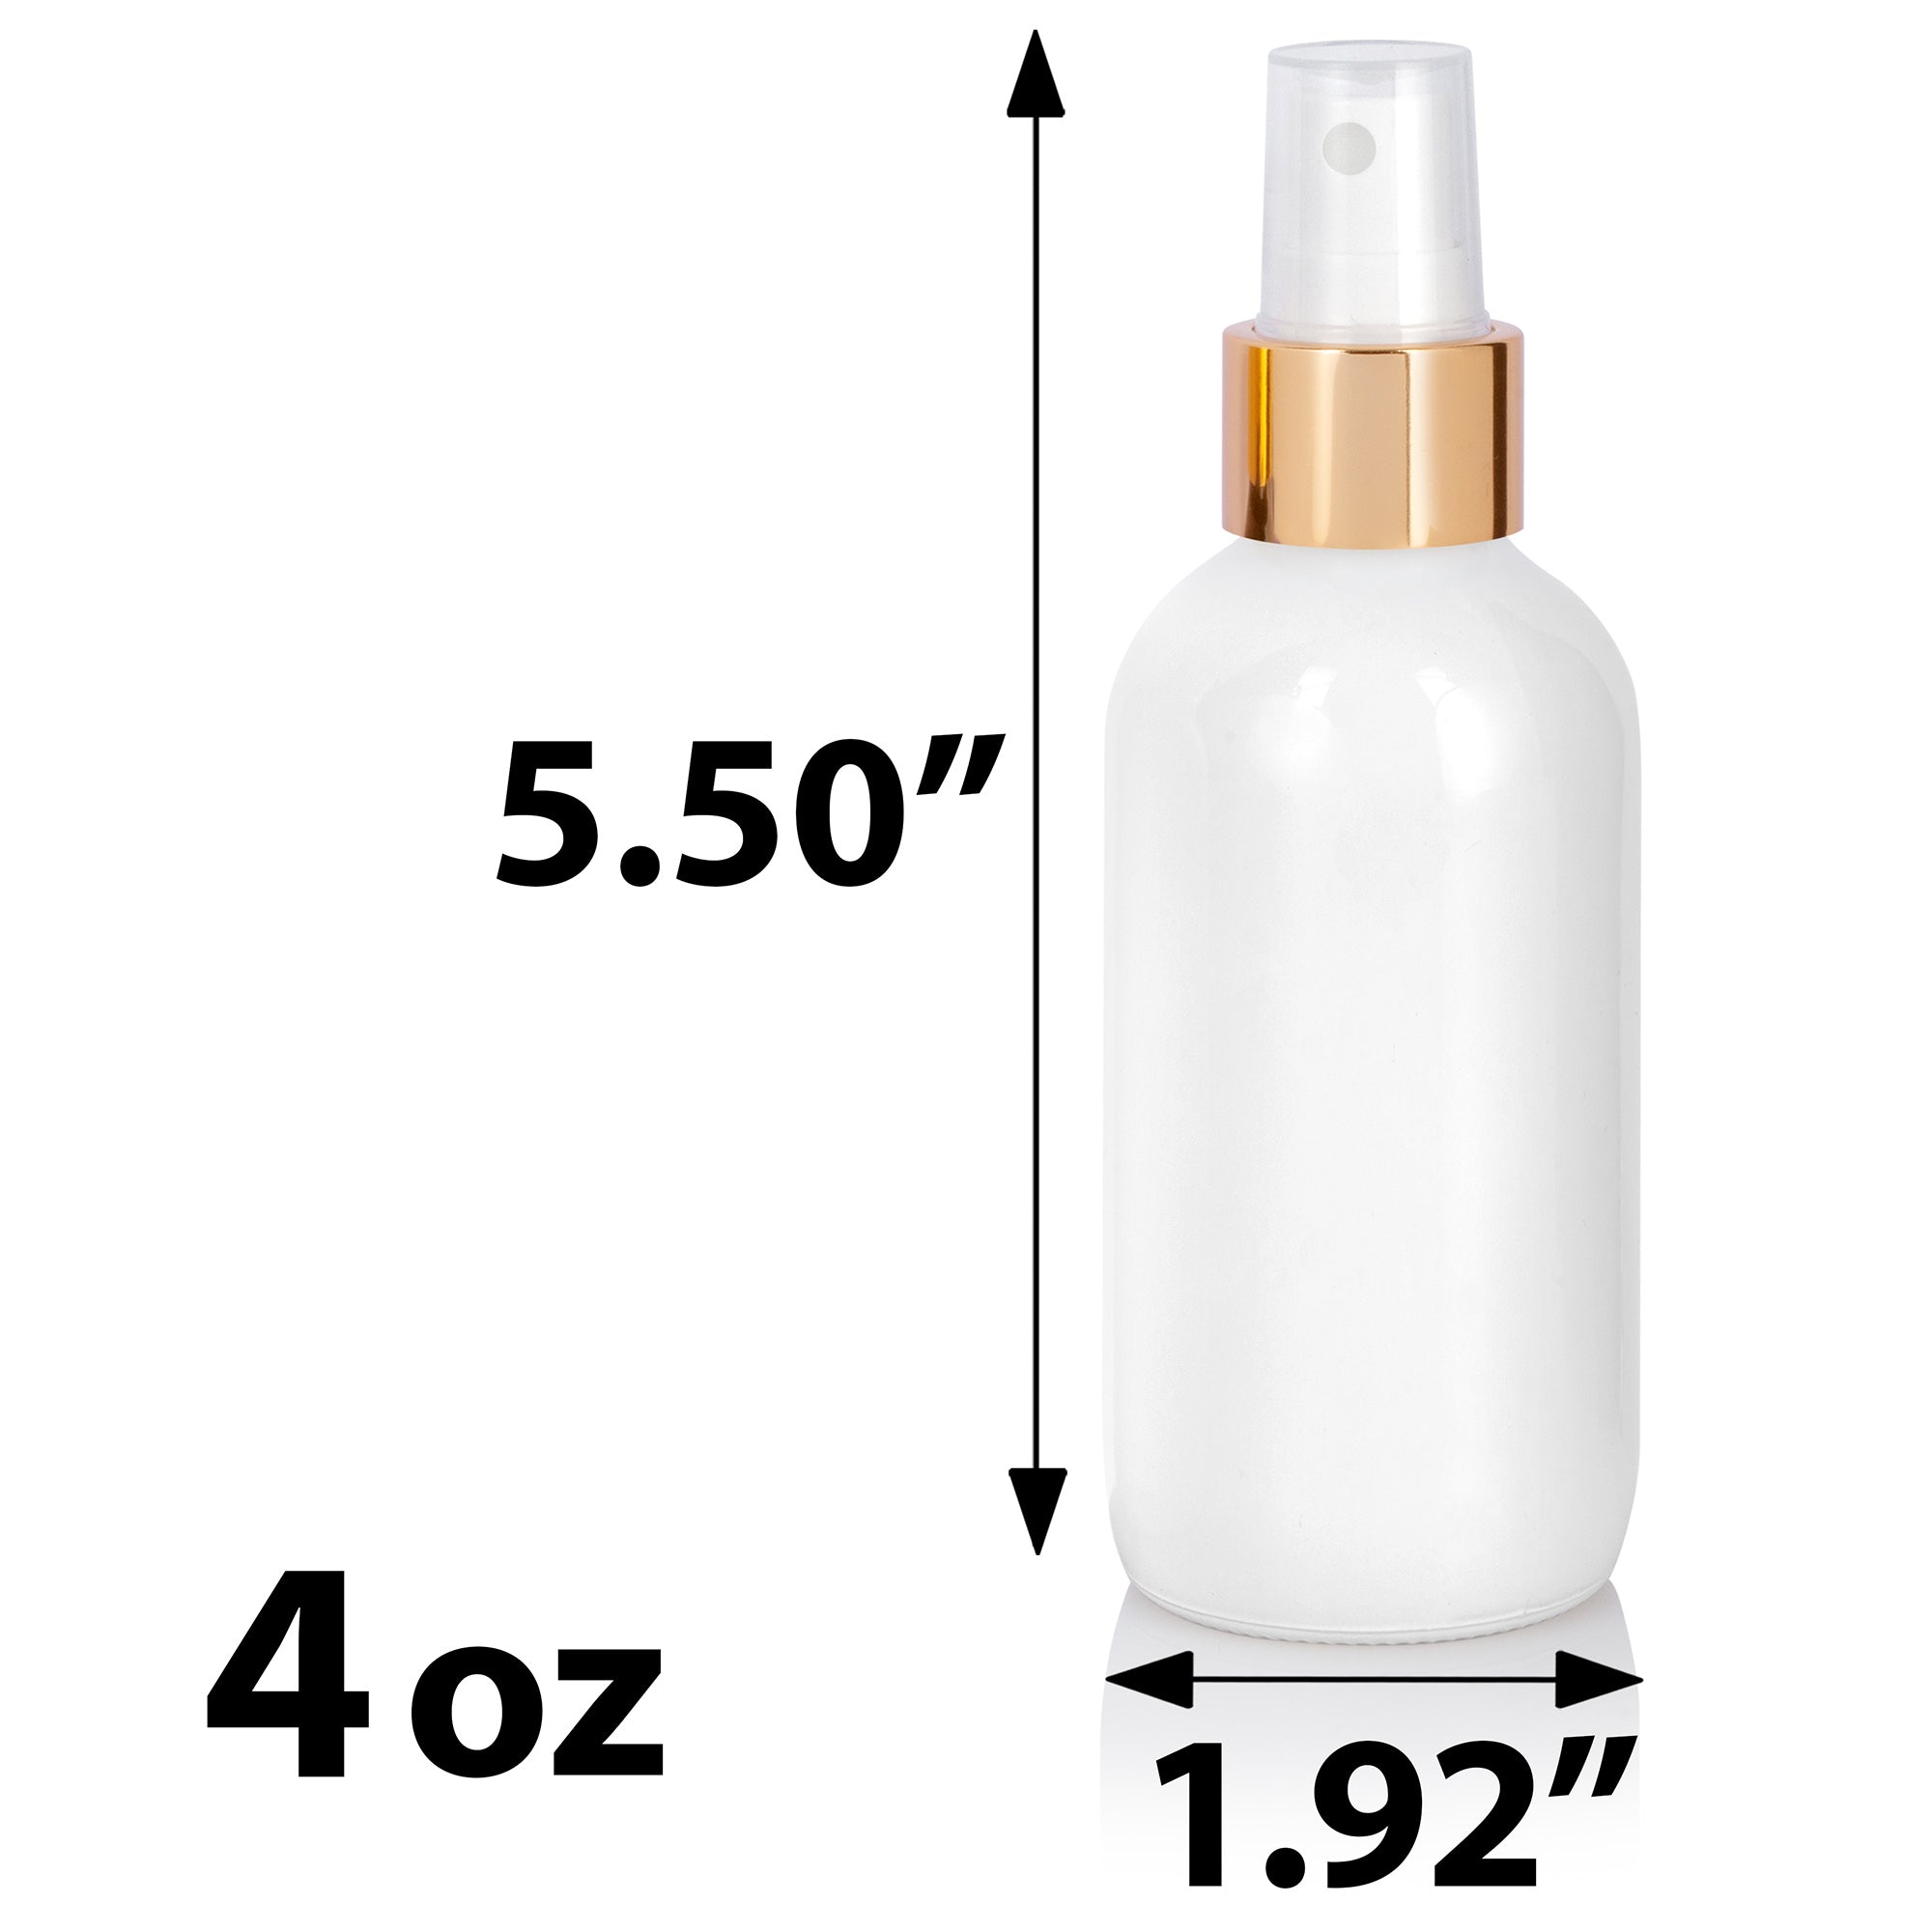 3.4 oz (100ml) Door-Shaped Square Glass Bottle with Fine Mist Spray Pumps